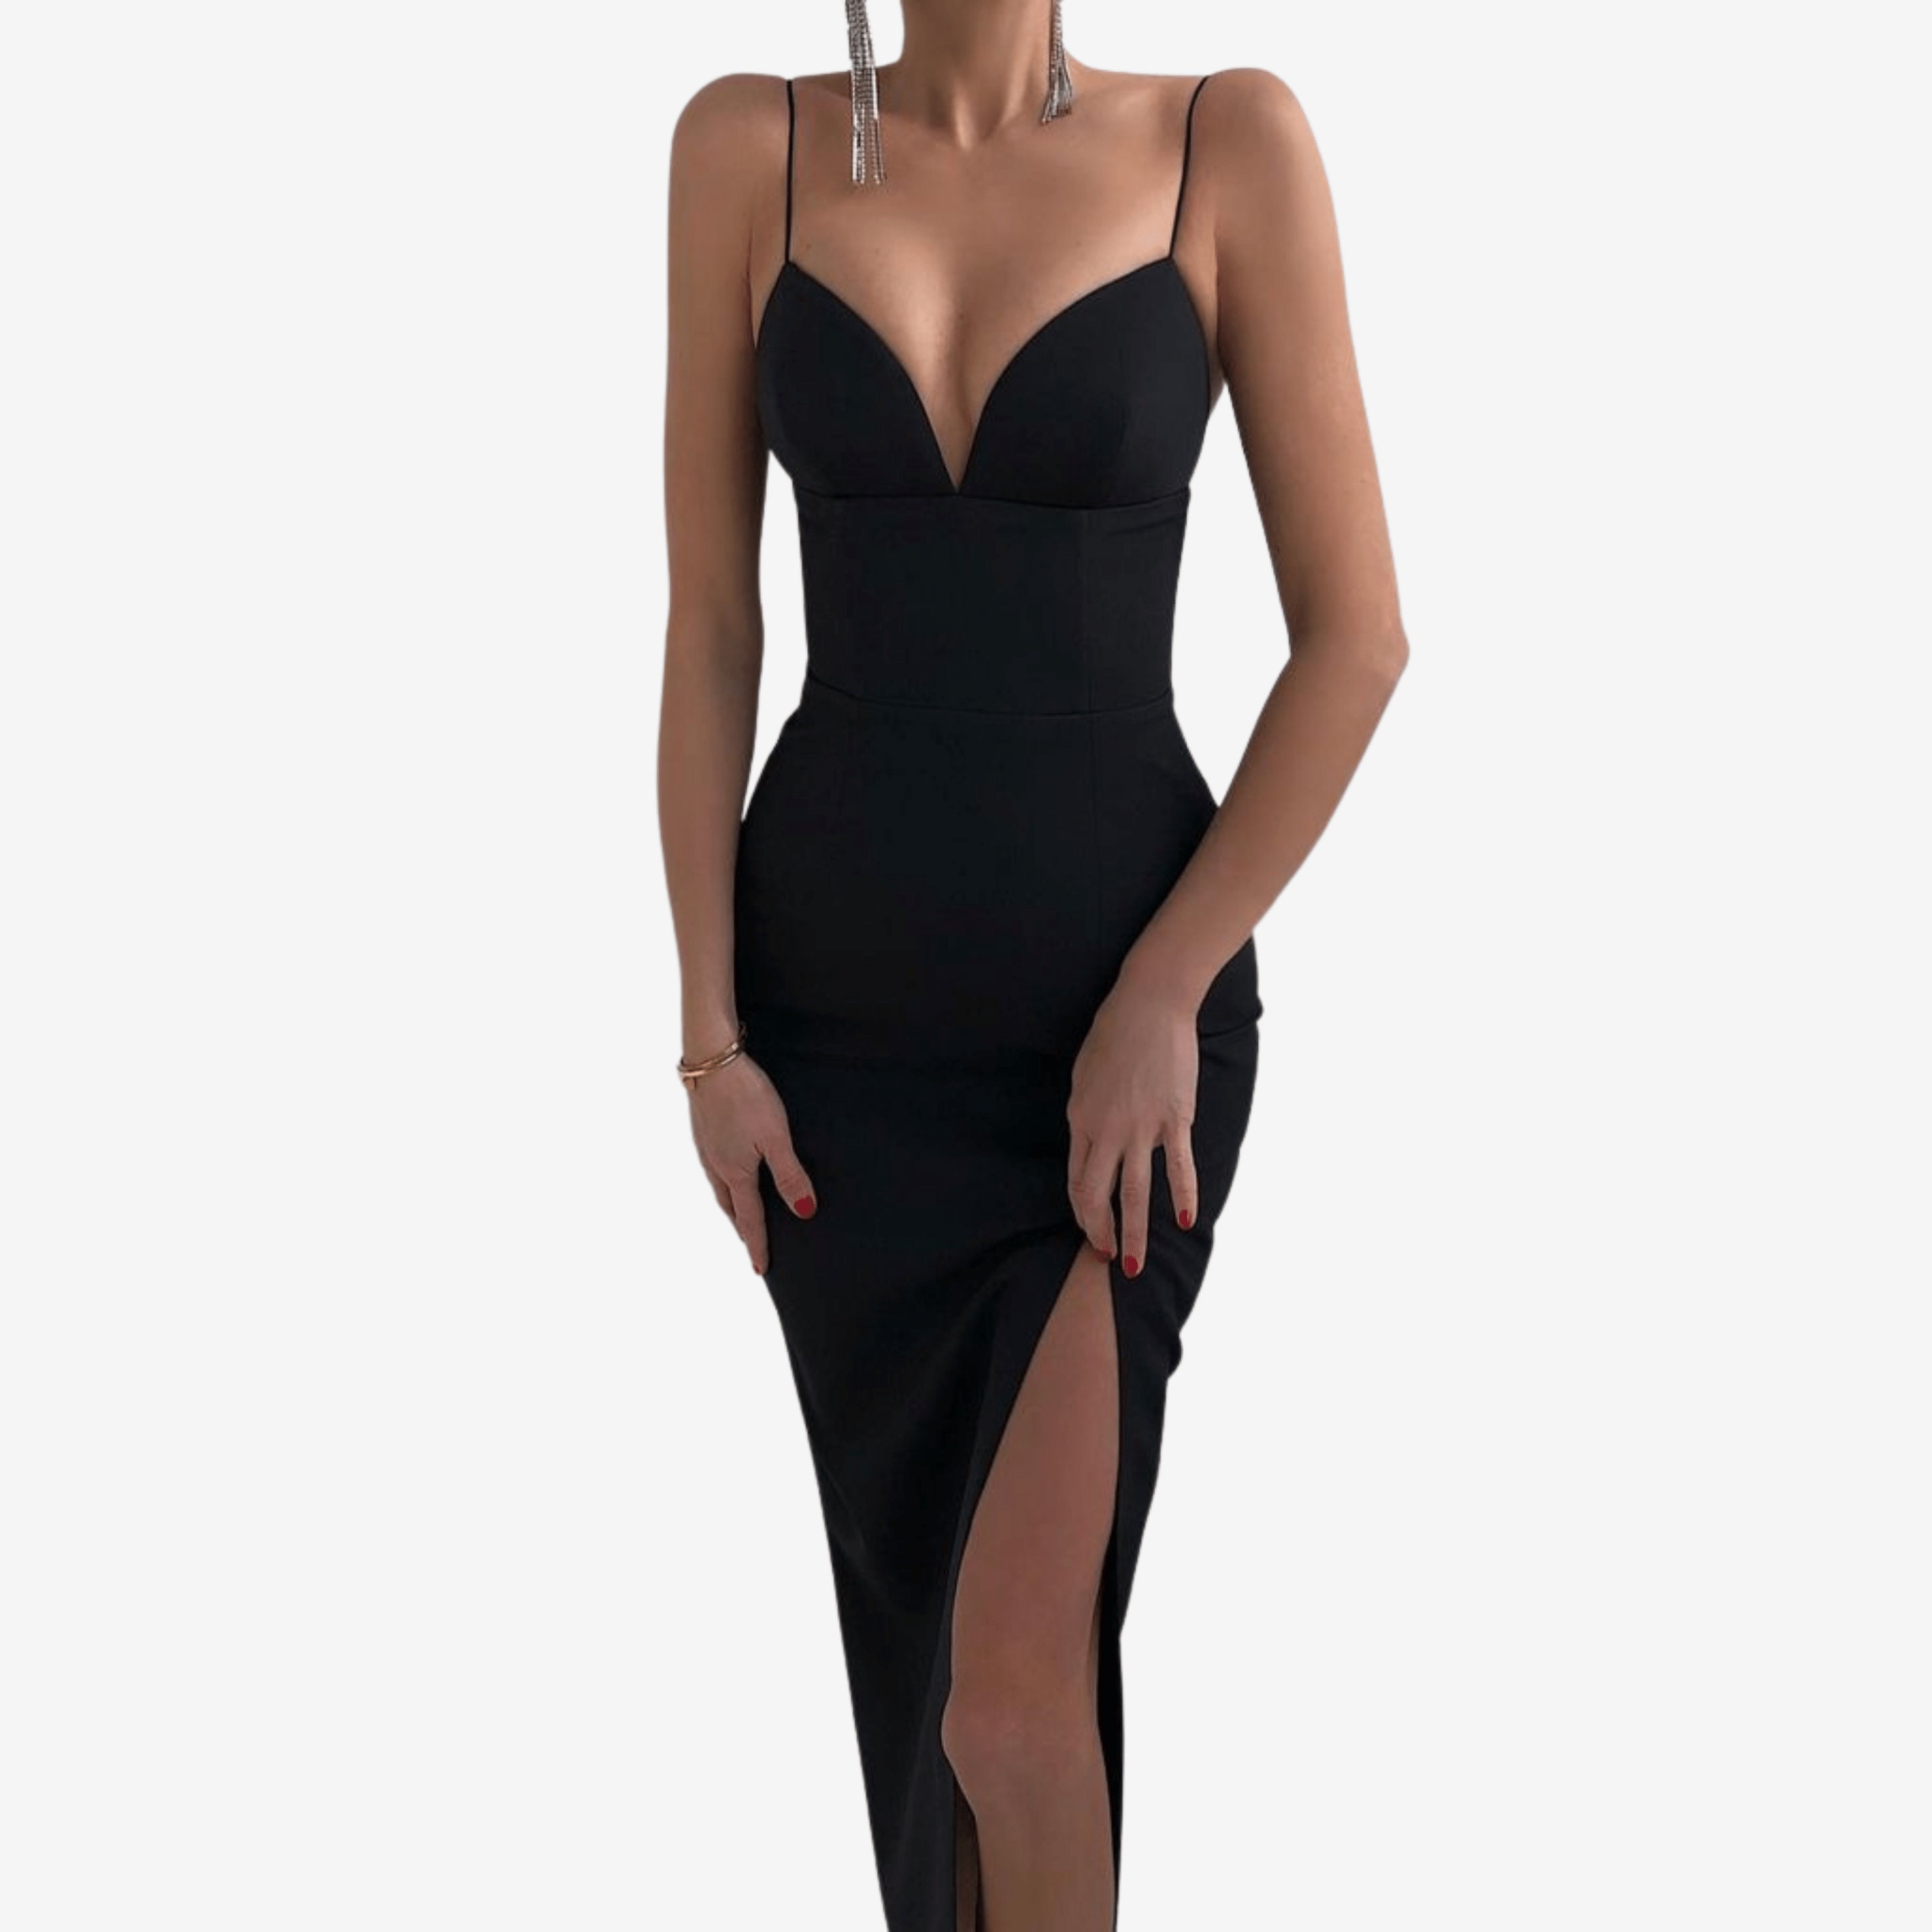 Windsor Women's Black High Slit Formal Dress Size 3/4 | eBay